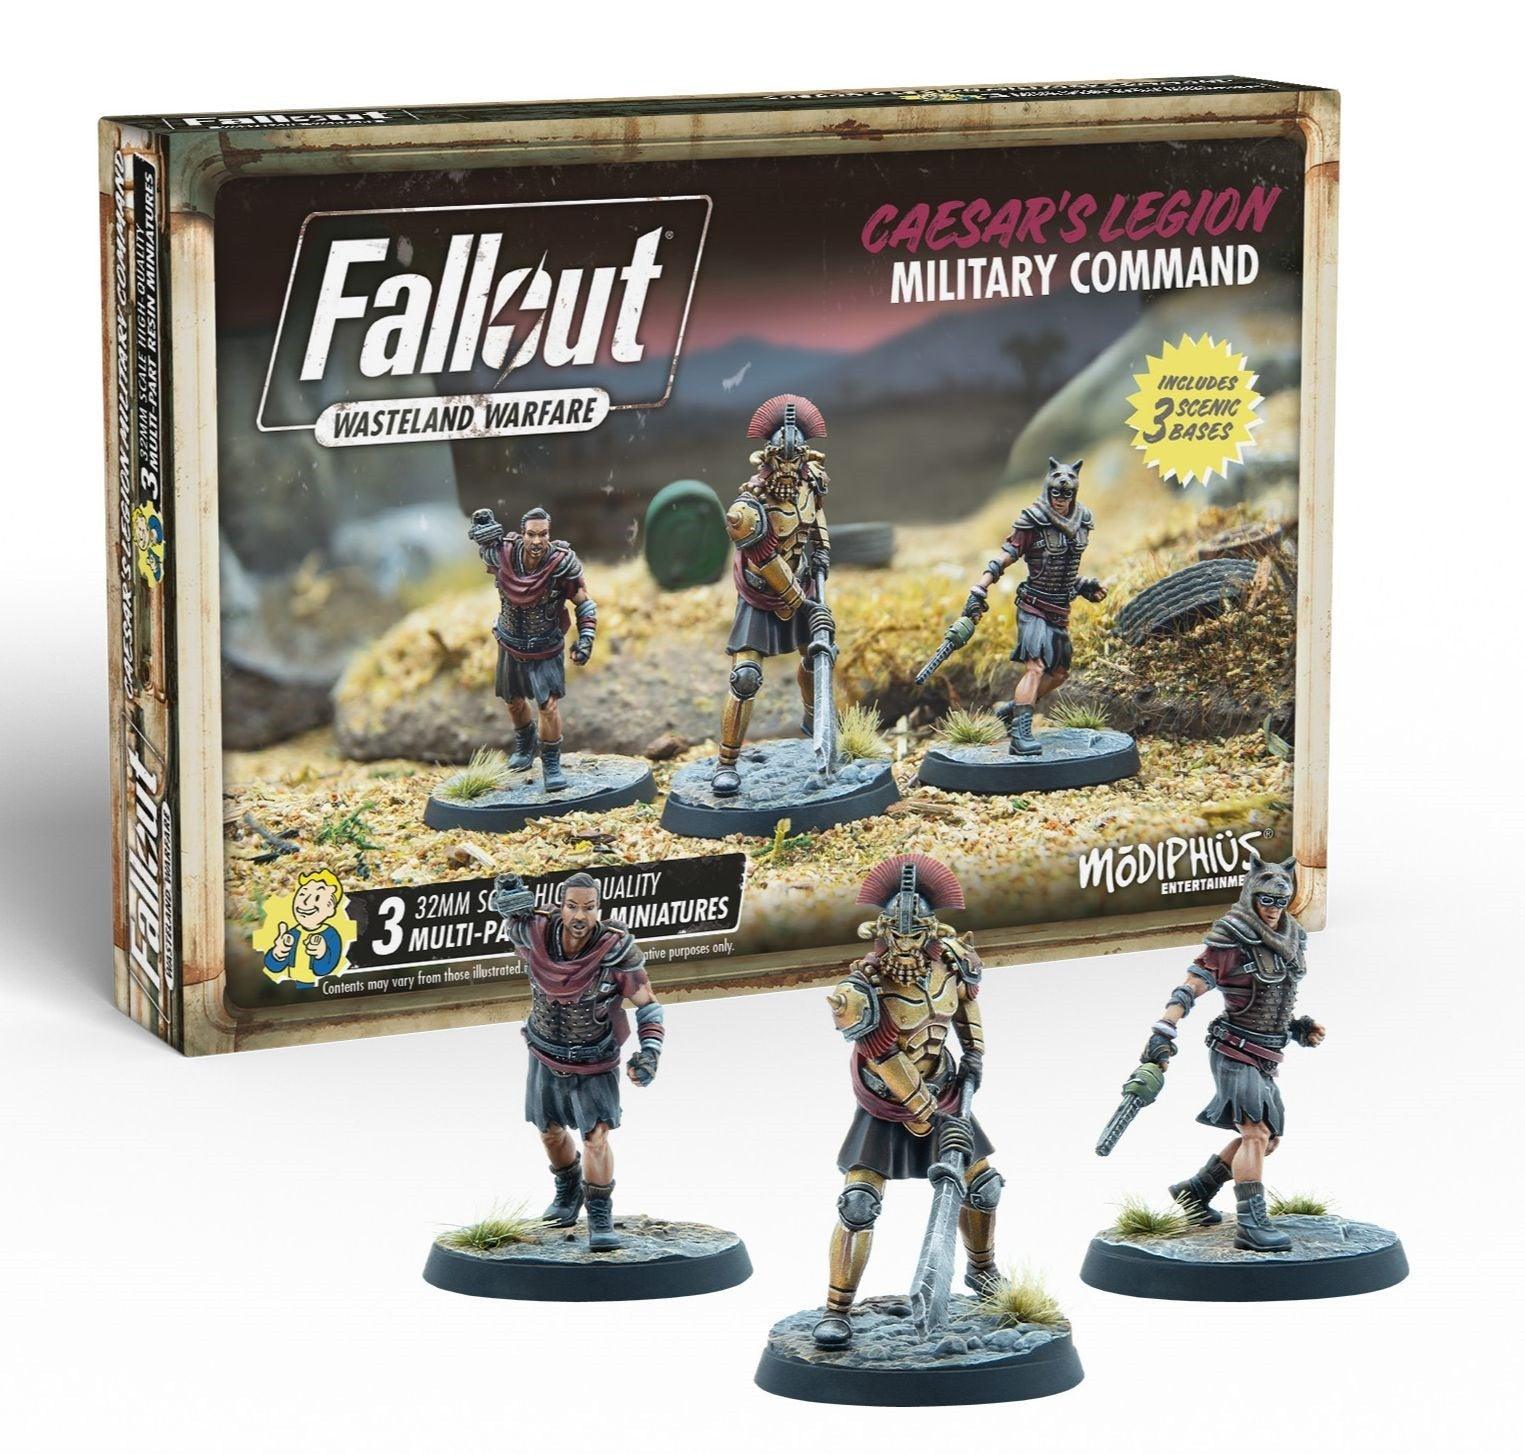 VR-89801 Fallout Wasteland Warfare Miniatures - Casesars Legion Military Command - Modiphius Entertainment - Titan Pop Culture